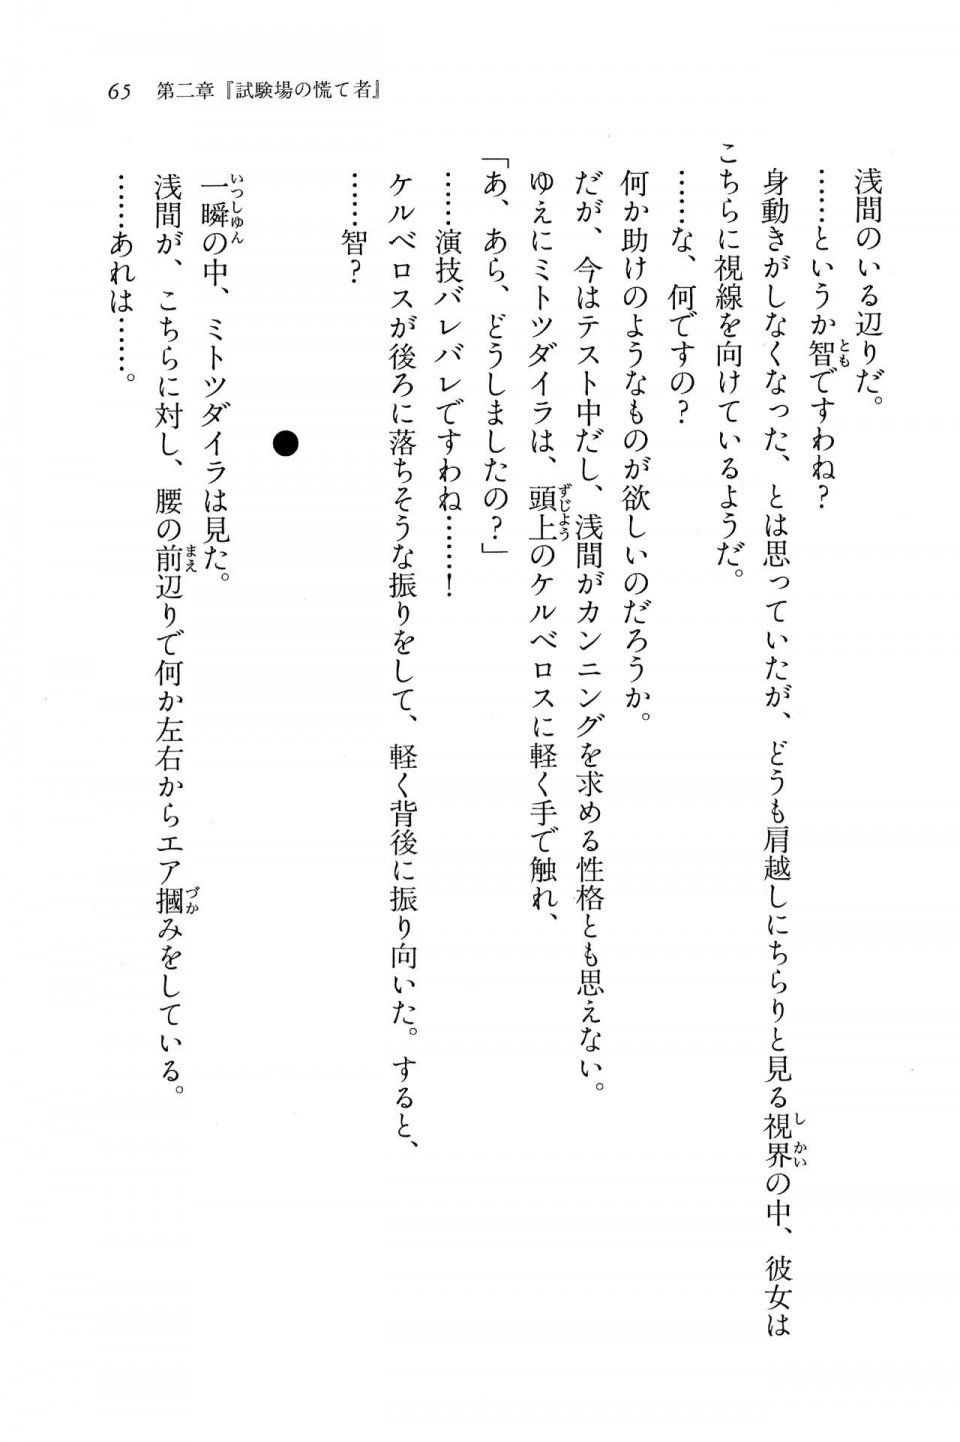 Kyoukai Senjou no Horizon BD Special Mininovel Vol 7(4A) - Photo #69